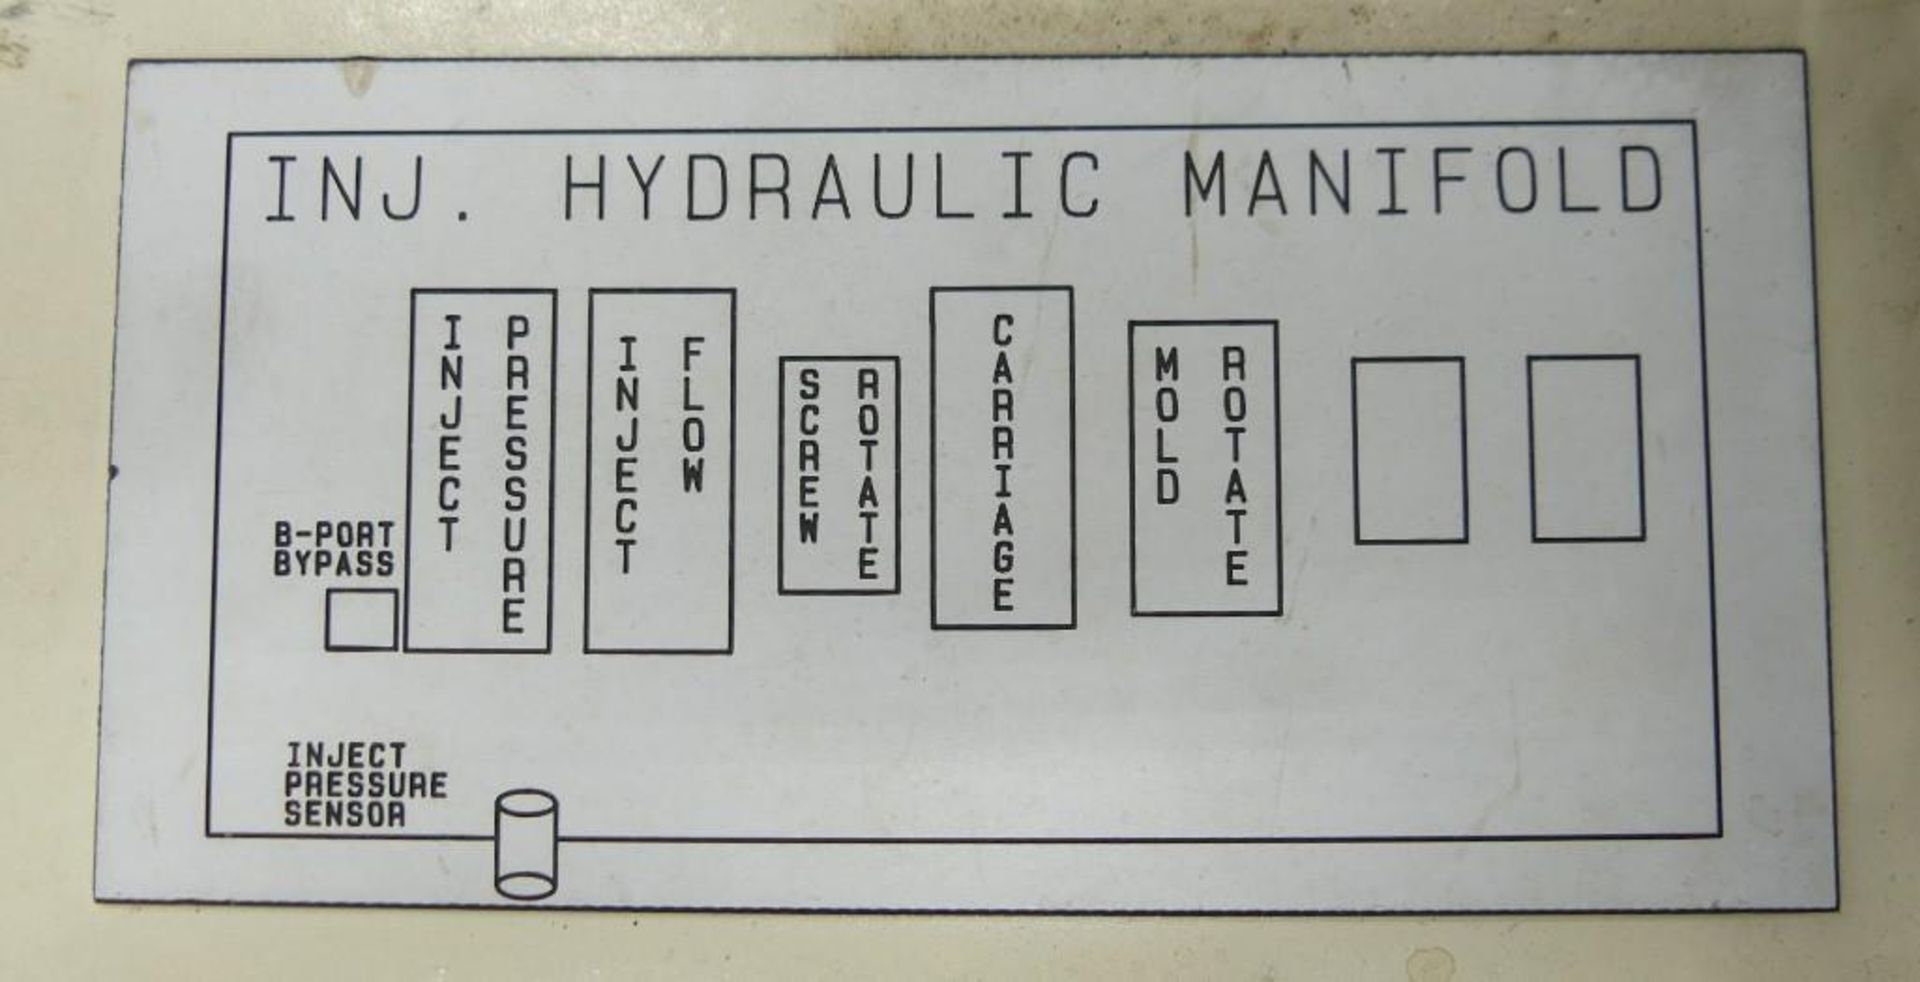 Hydraulic Manifold - Image 40 of 53